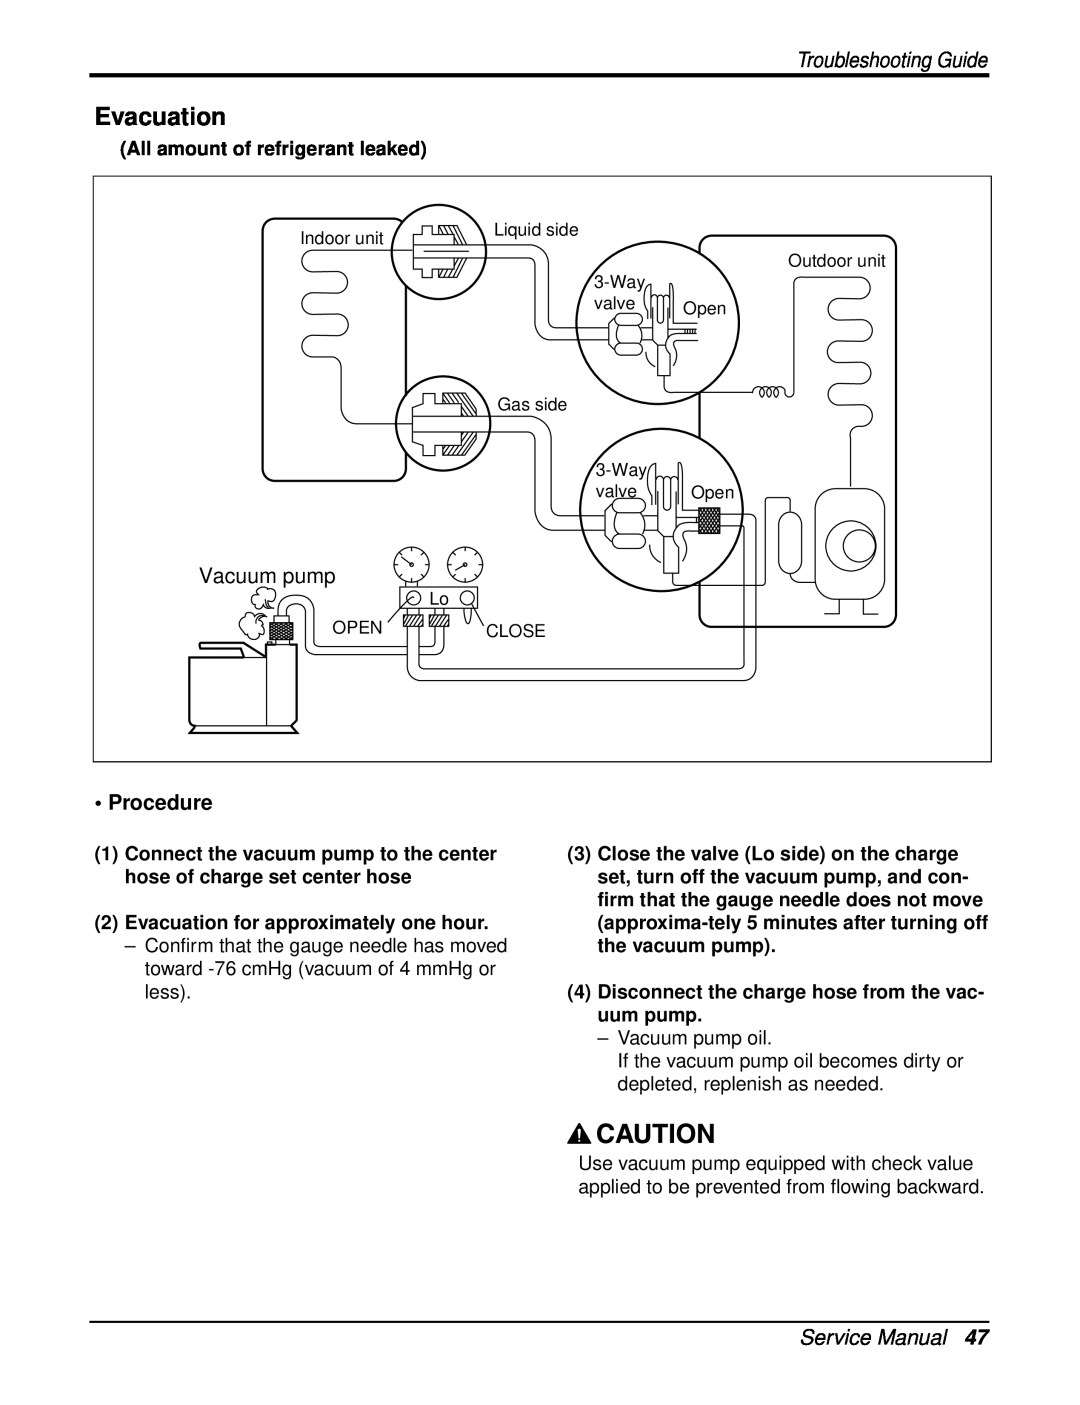 Heat Controller DMH12SB-0, DMC18SB-1 Evacuation, Troubleshooting Guide, Procedure, All amount of refrigerant leaked 